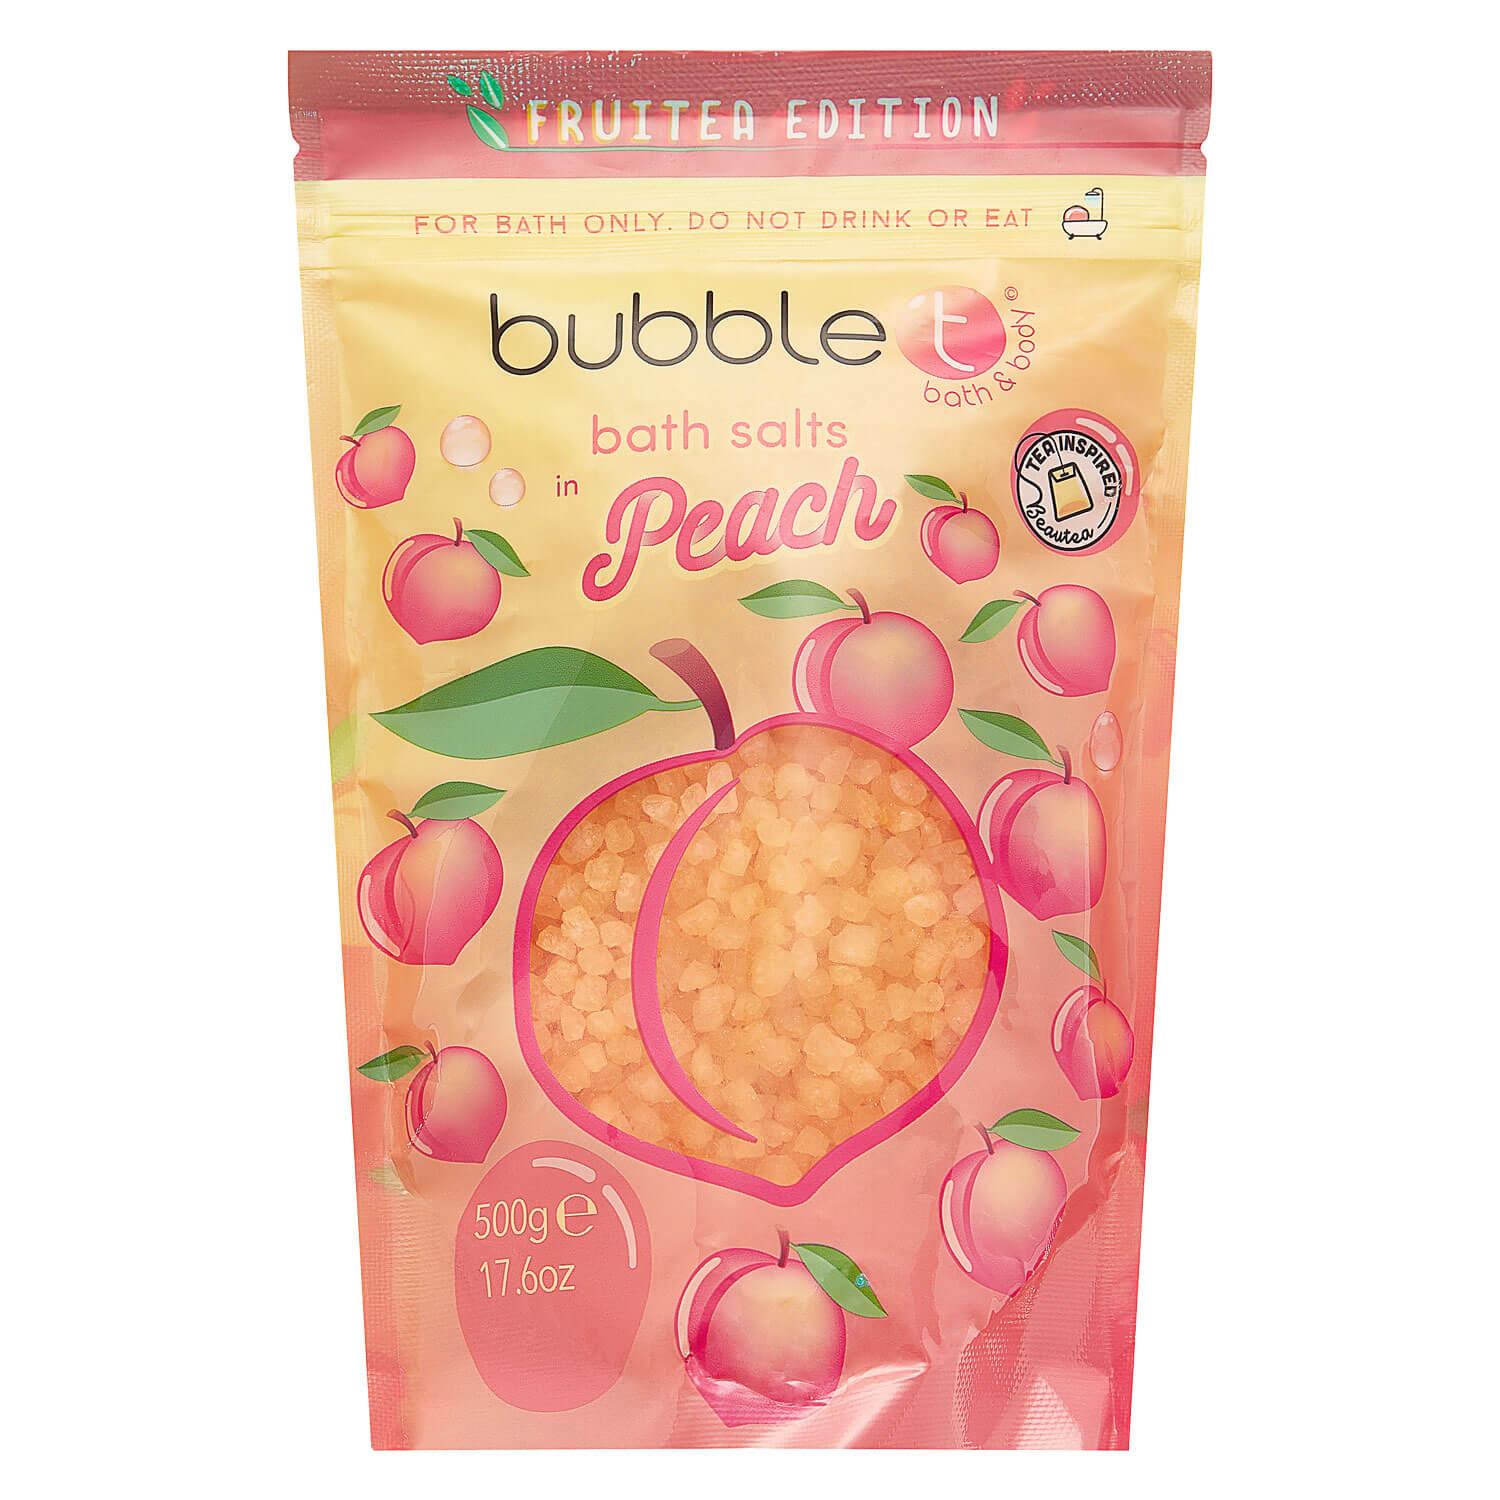 bubble t - Fruitea Bath Salts Peach